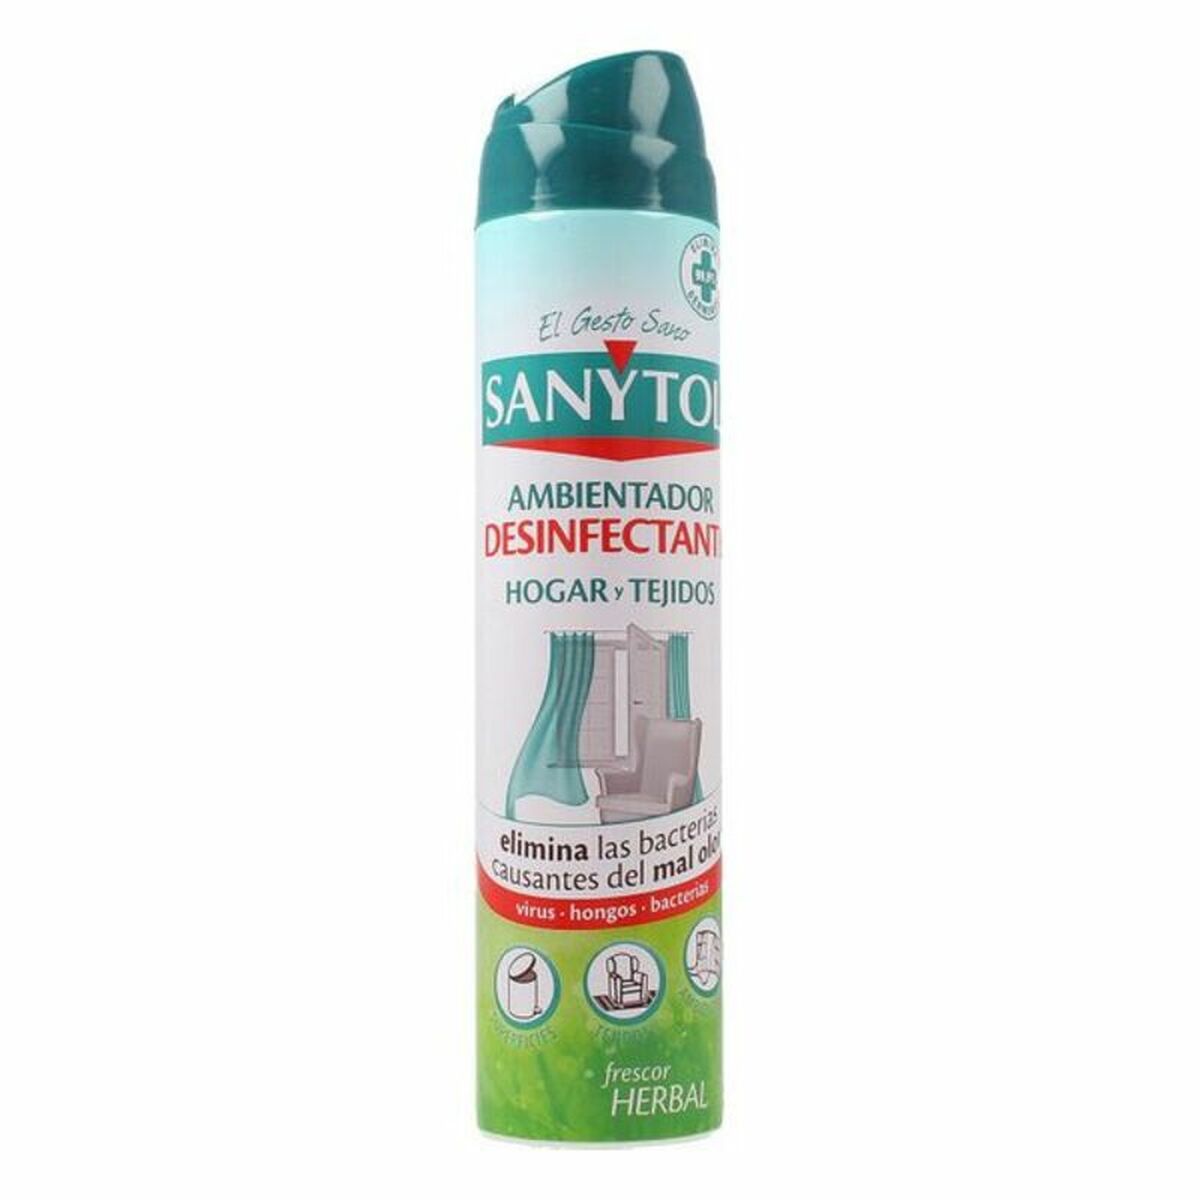 Air Freshener Spray Sanytol In Pakistan